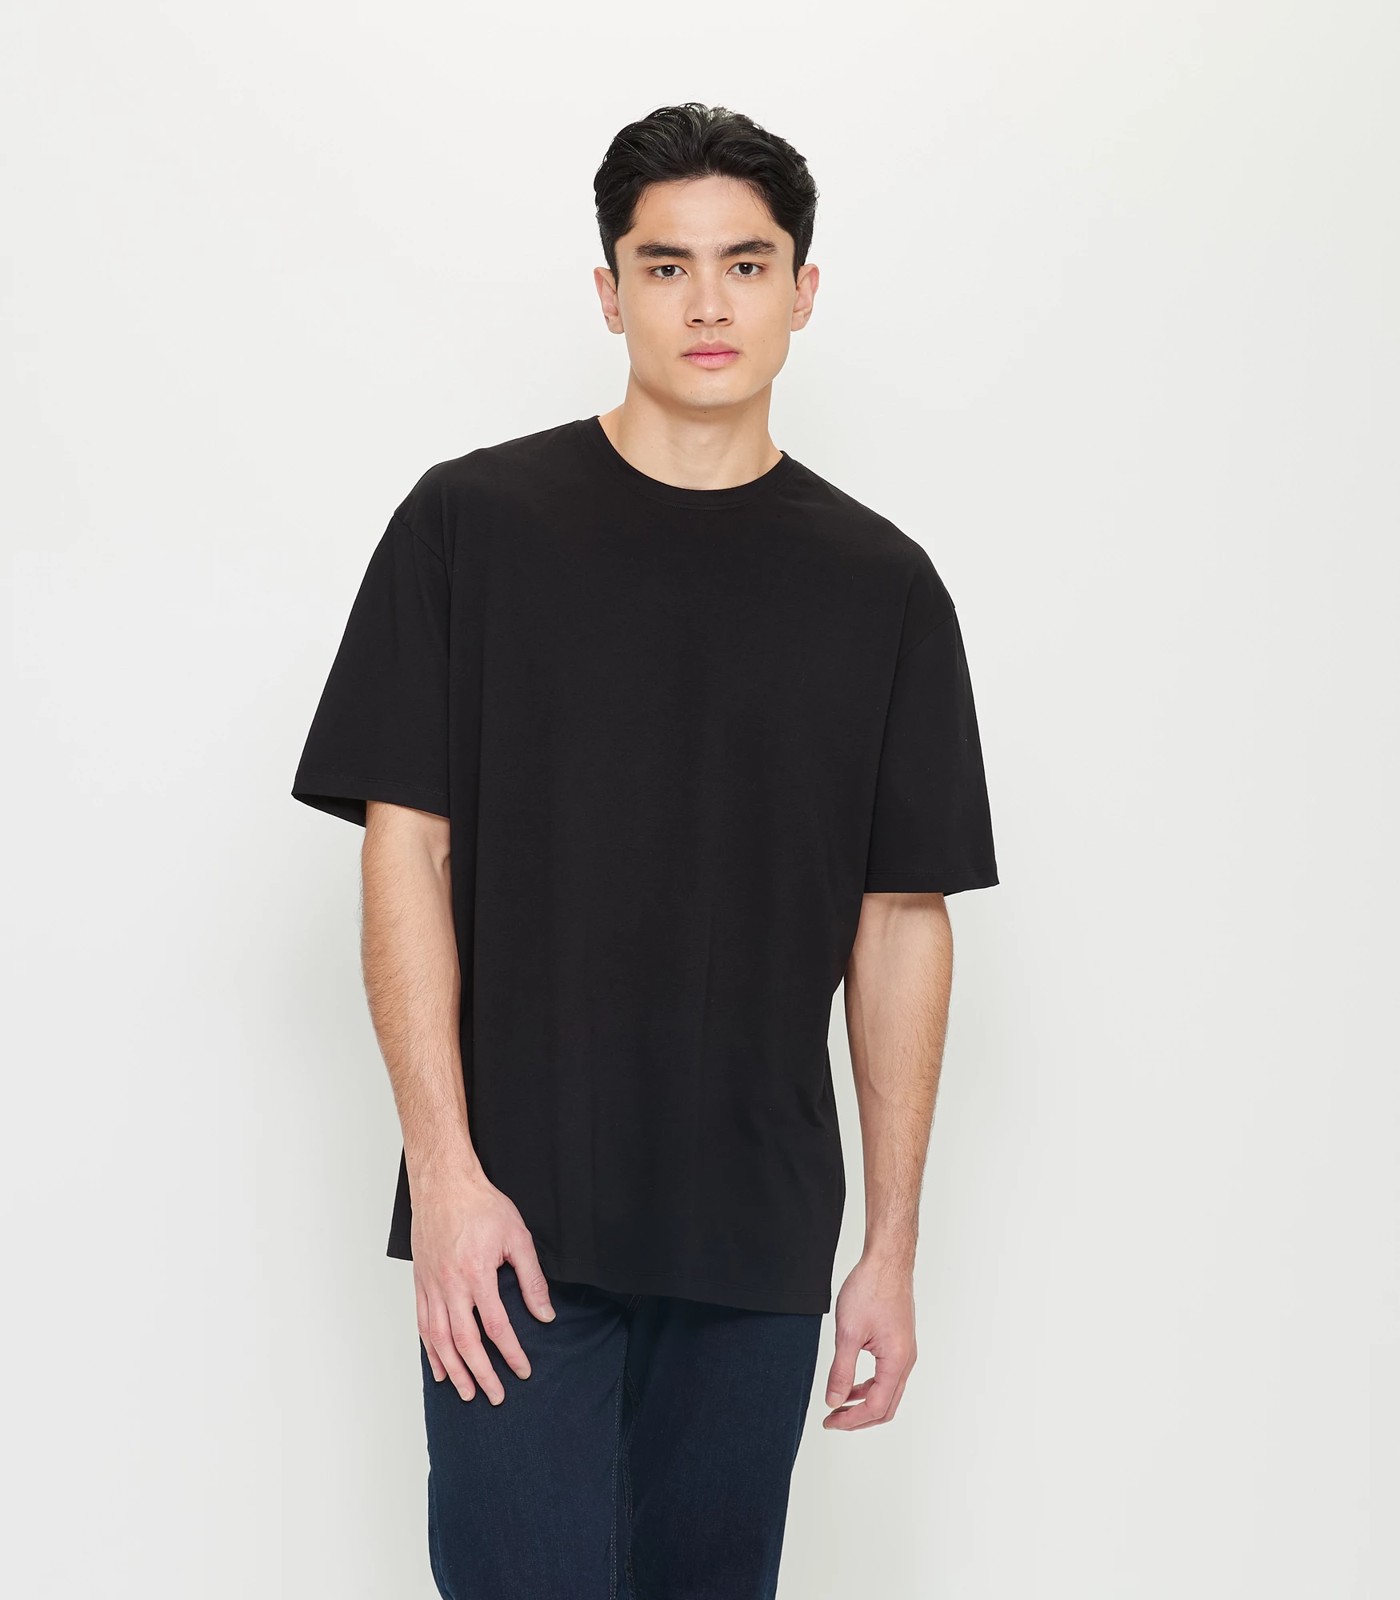 Australian Cotton Oversized T-Shirt - Black